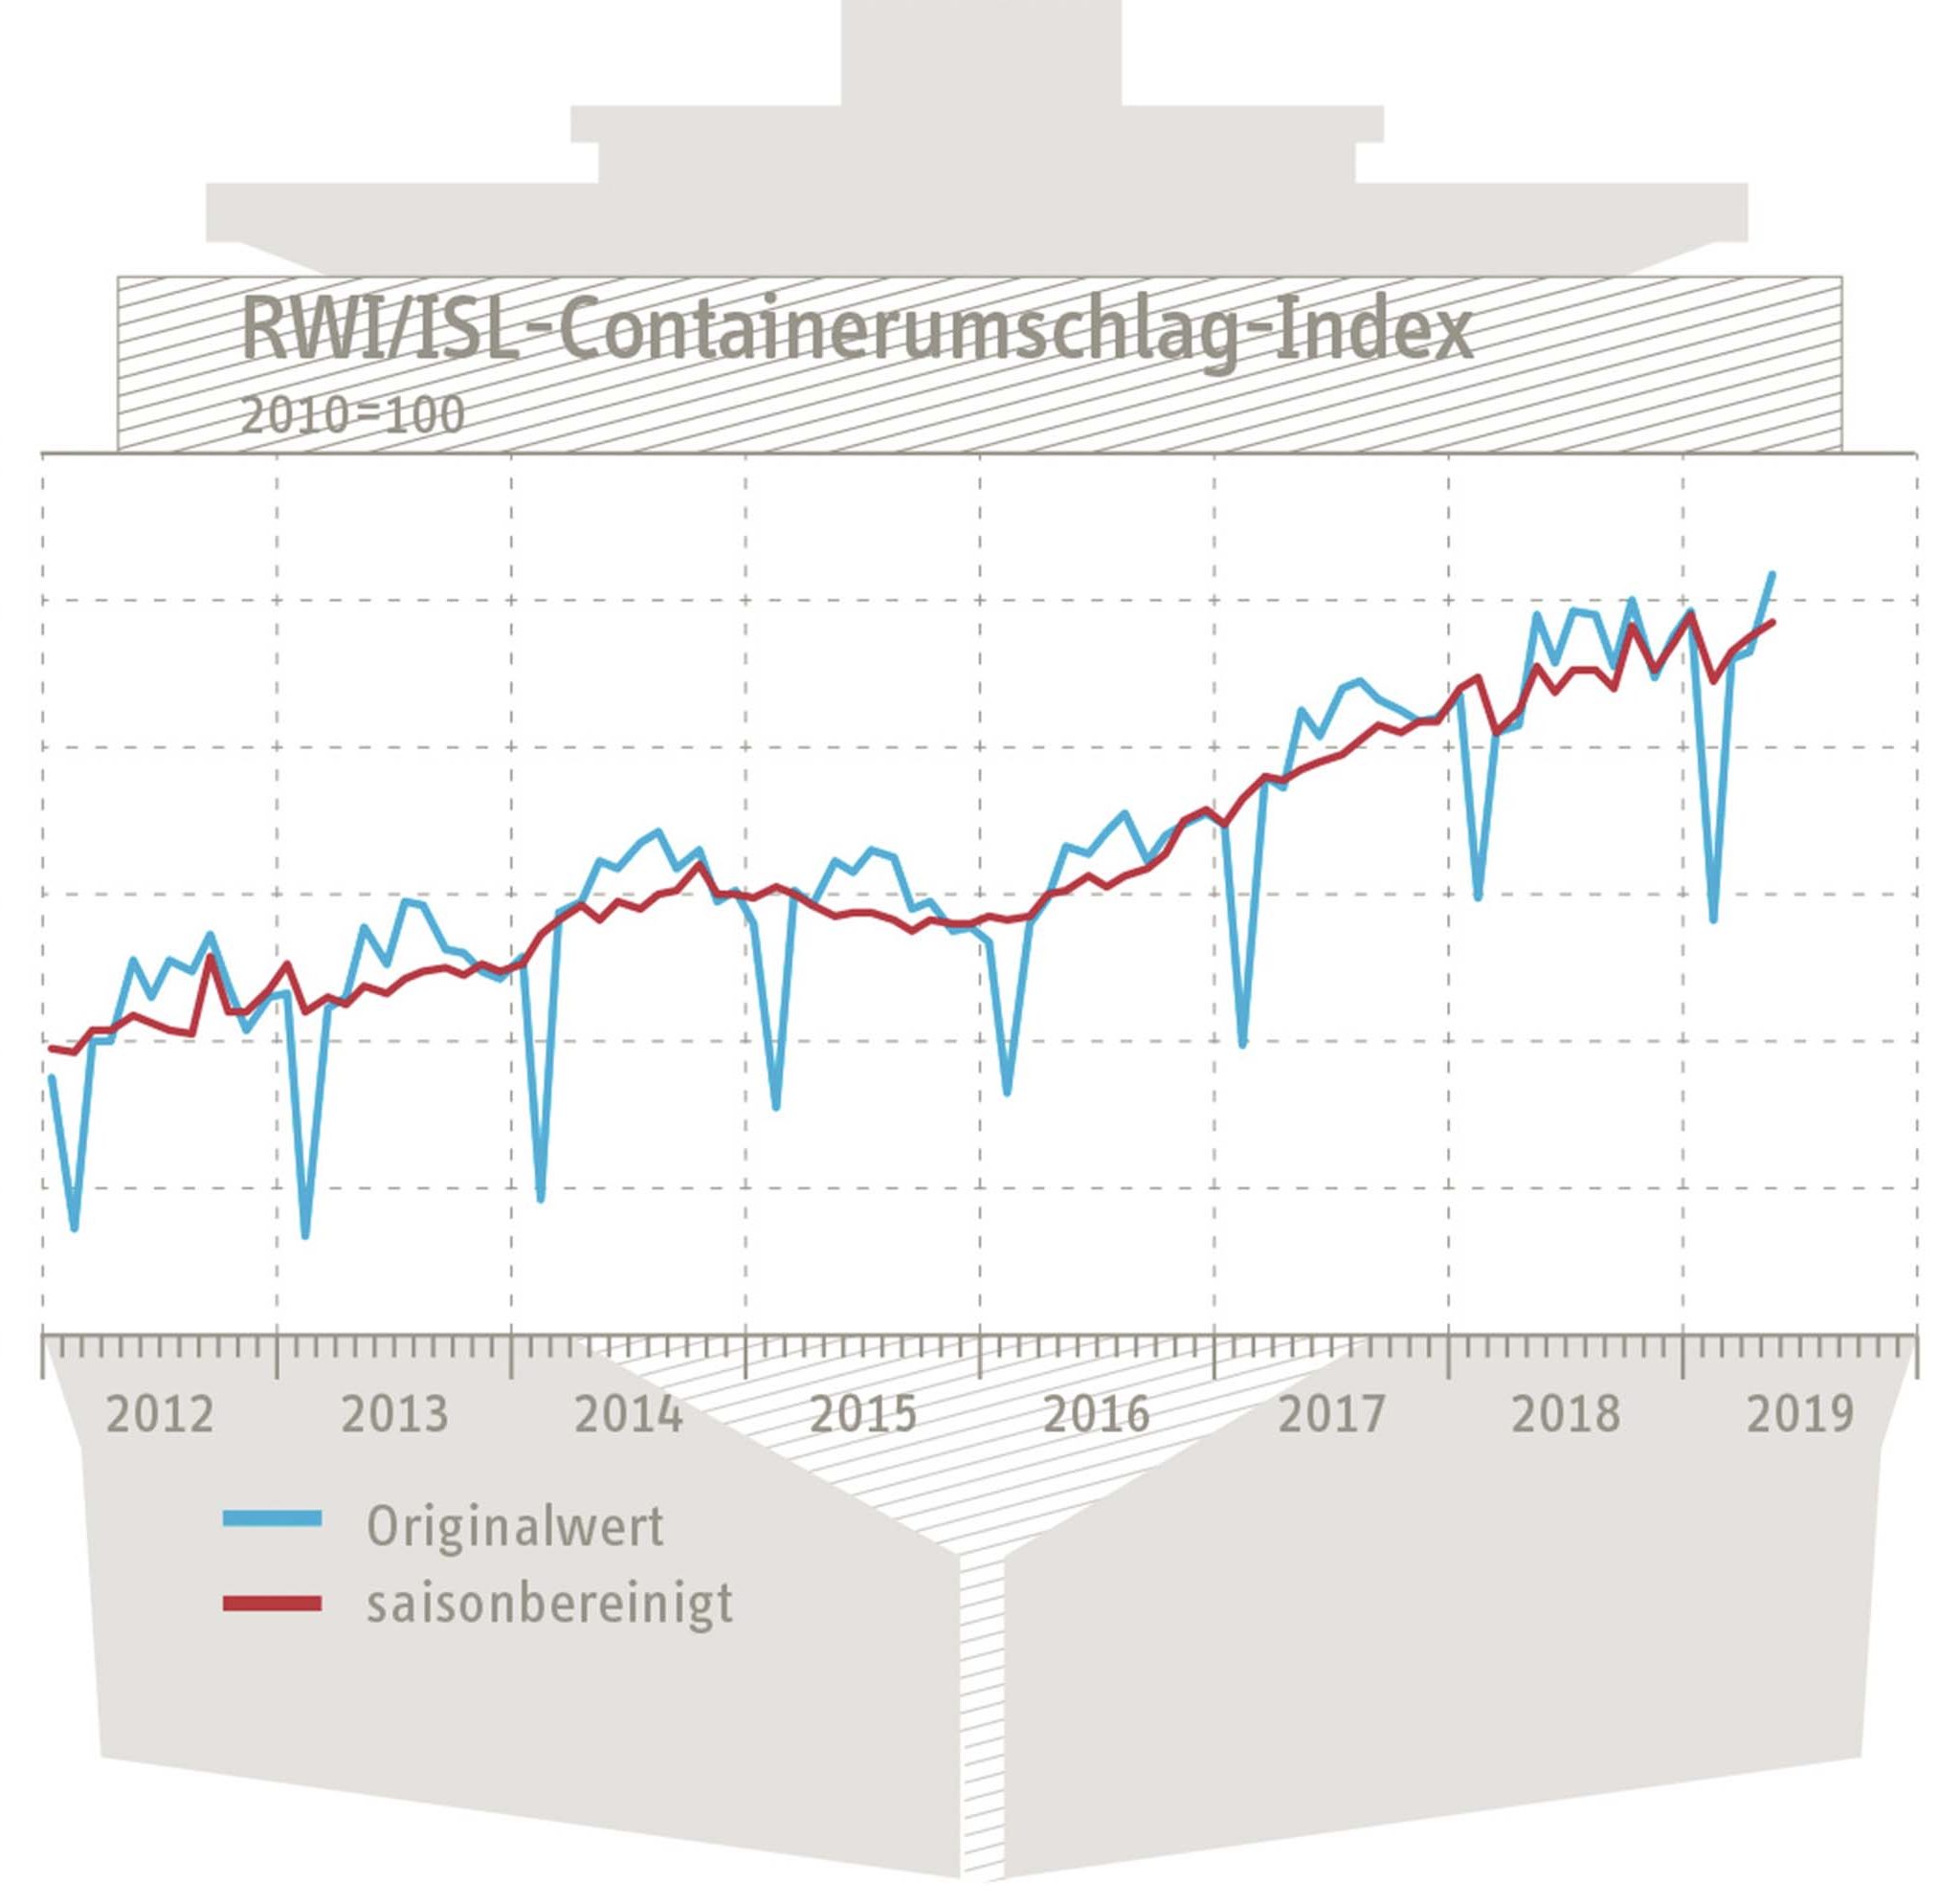 Internationale containeroverslagindex RWI/ISL stijgt